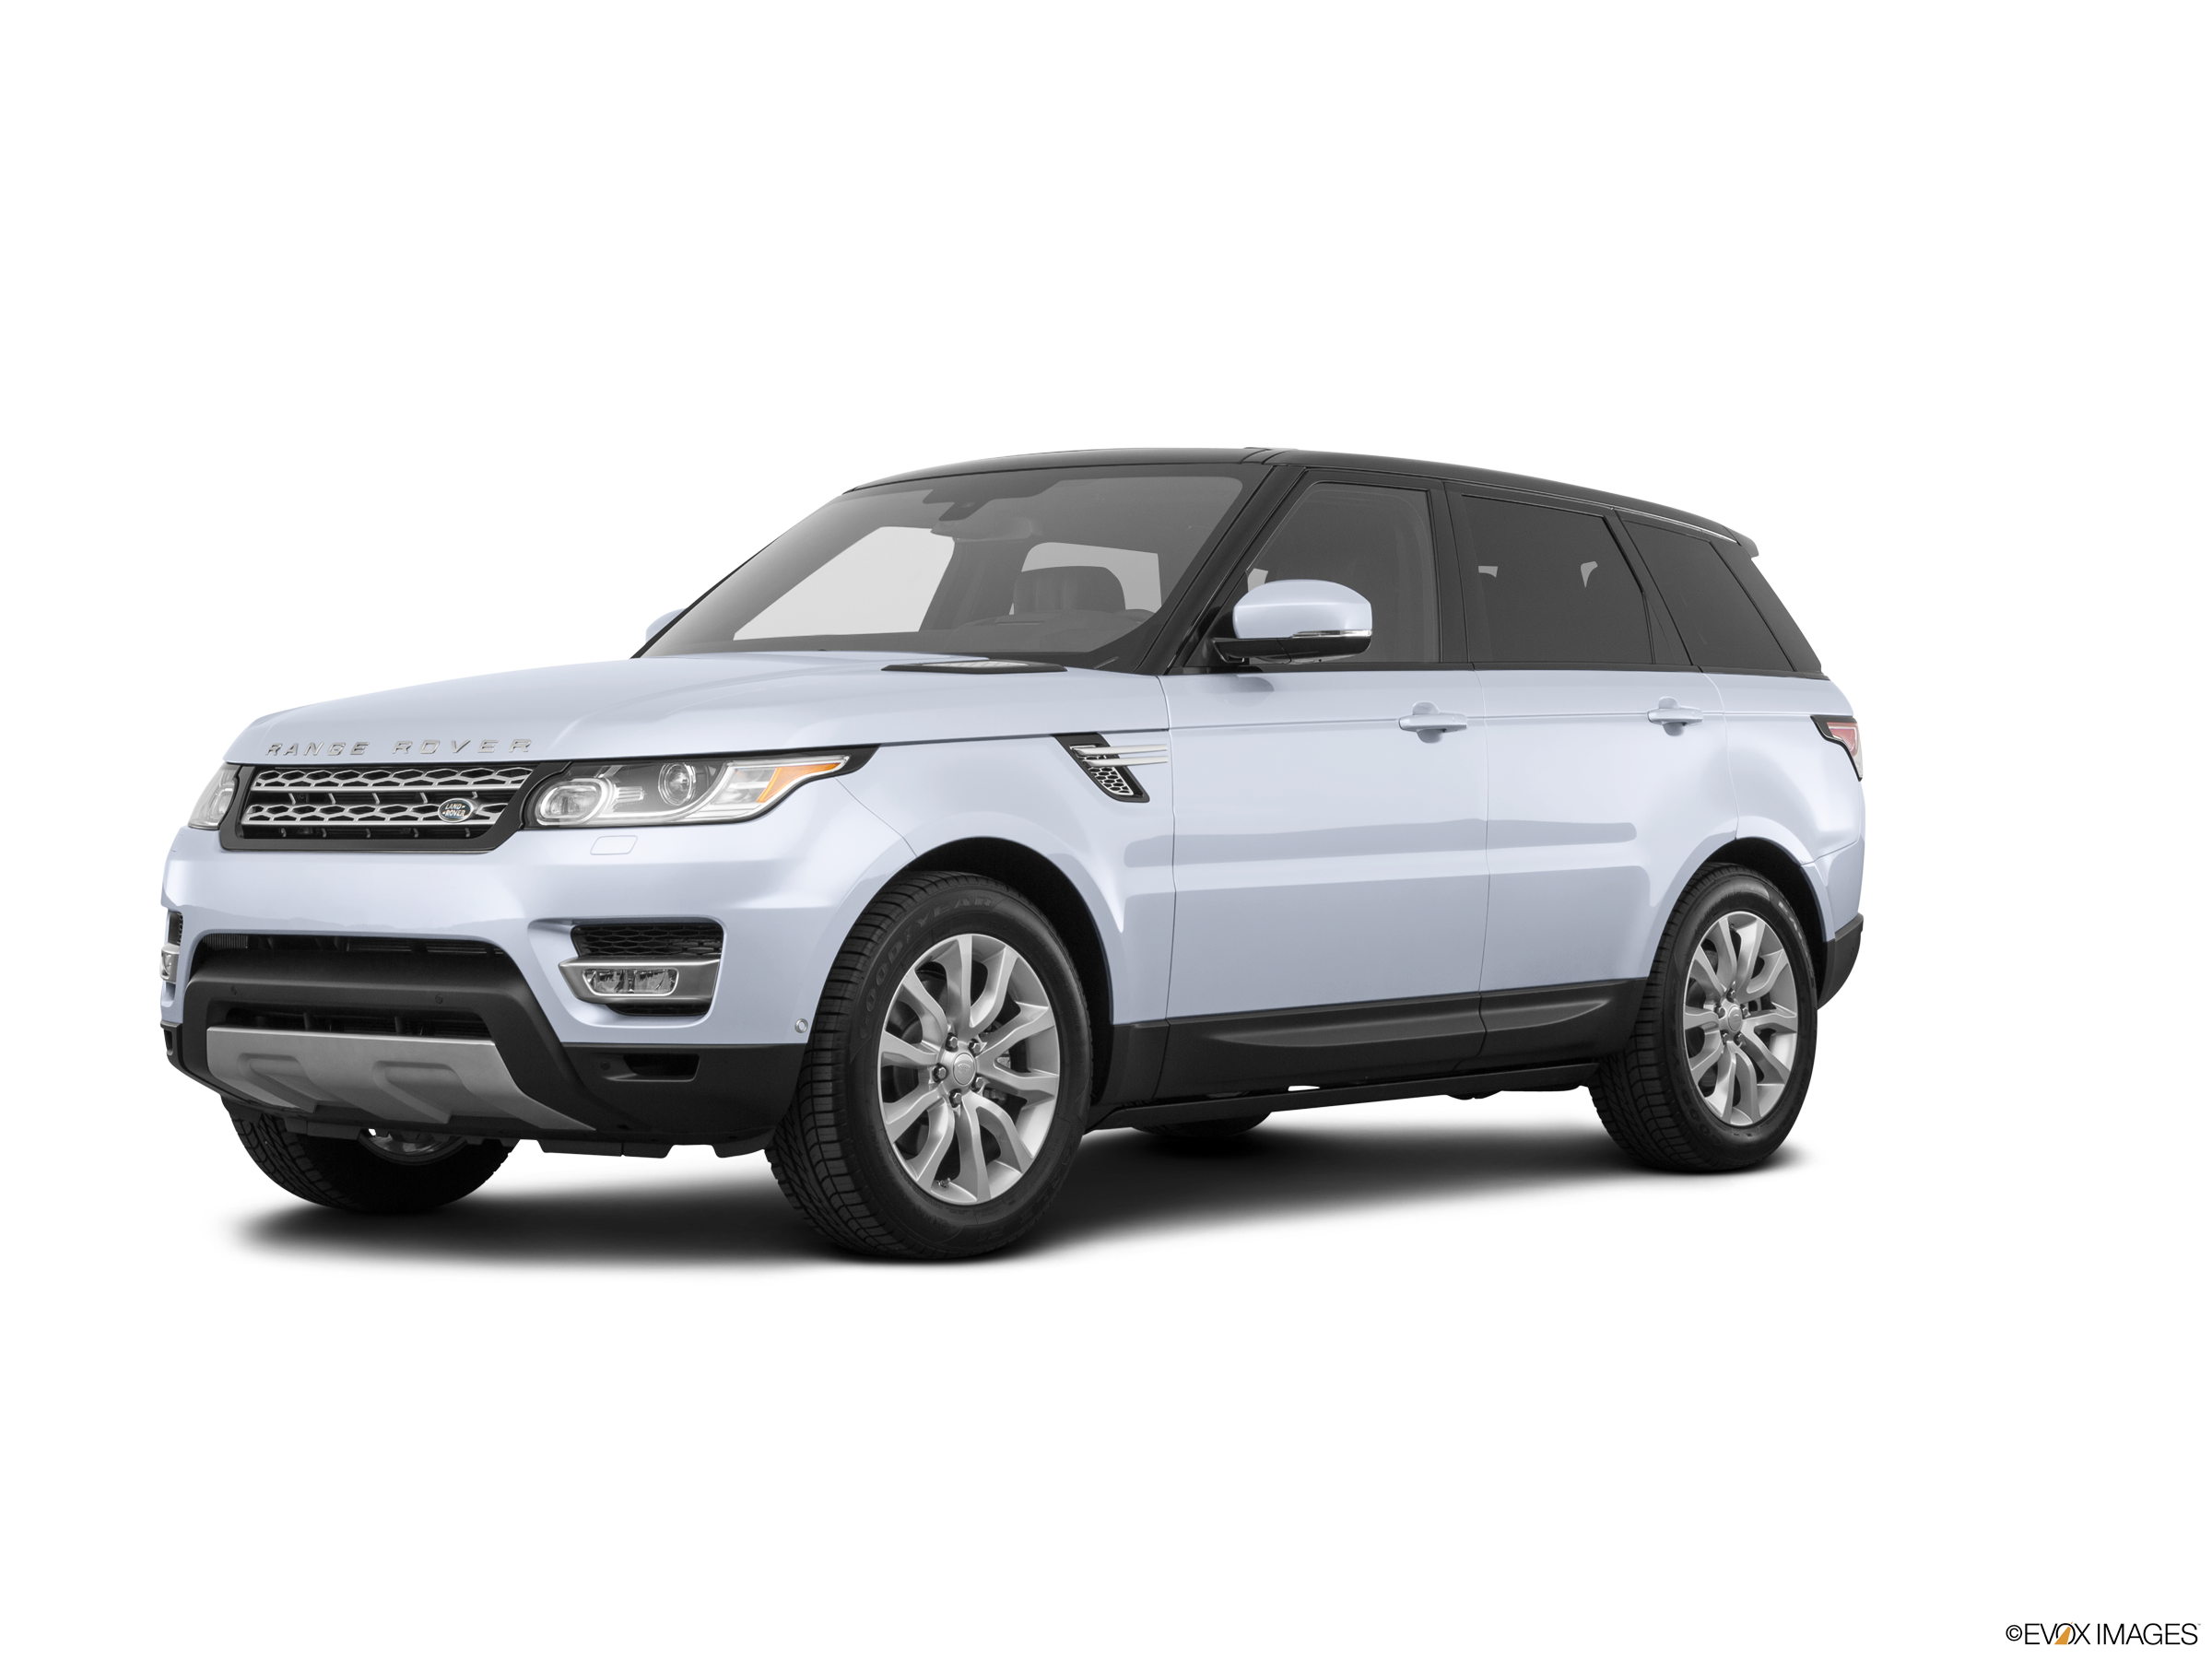 Onenigheid films ophouden 2017 Land Rover Range Rover Values & Cars for Sale | Kelley Blue Book